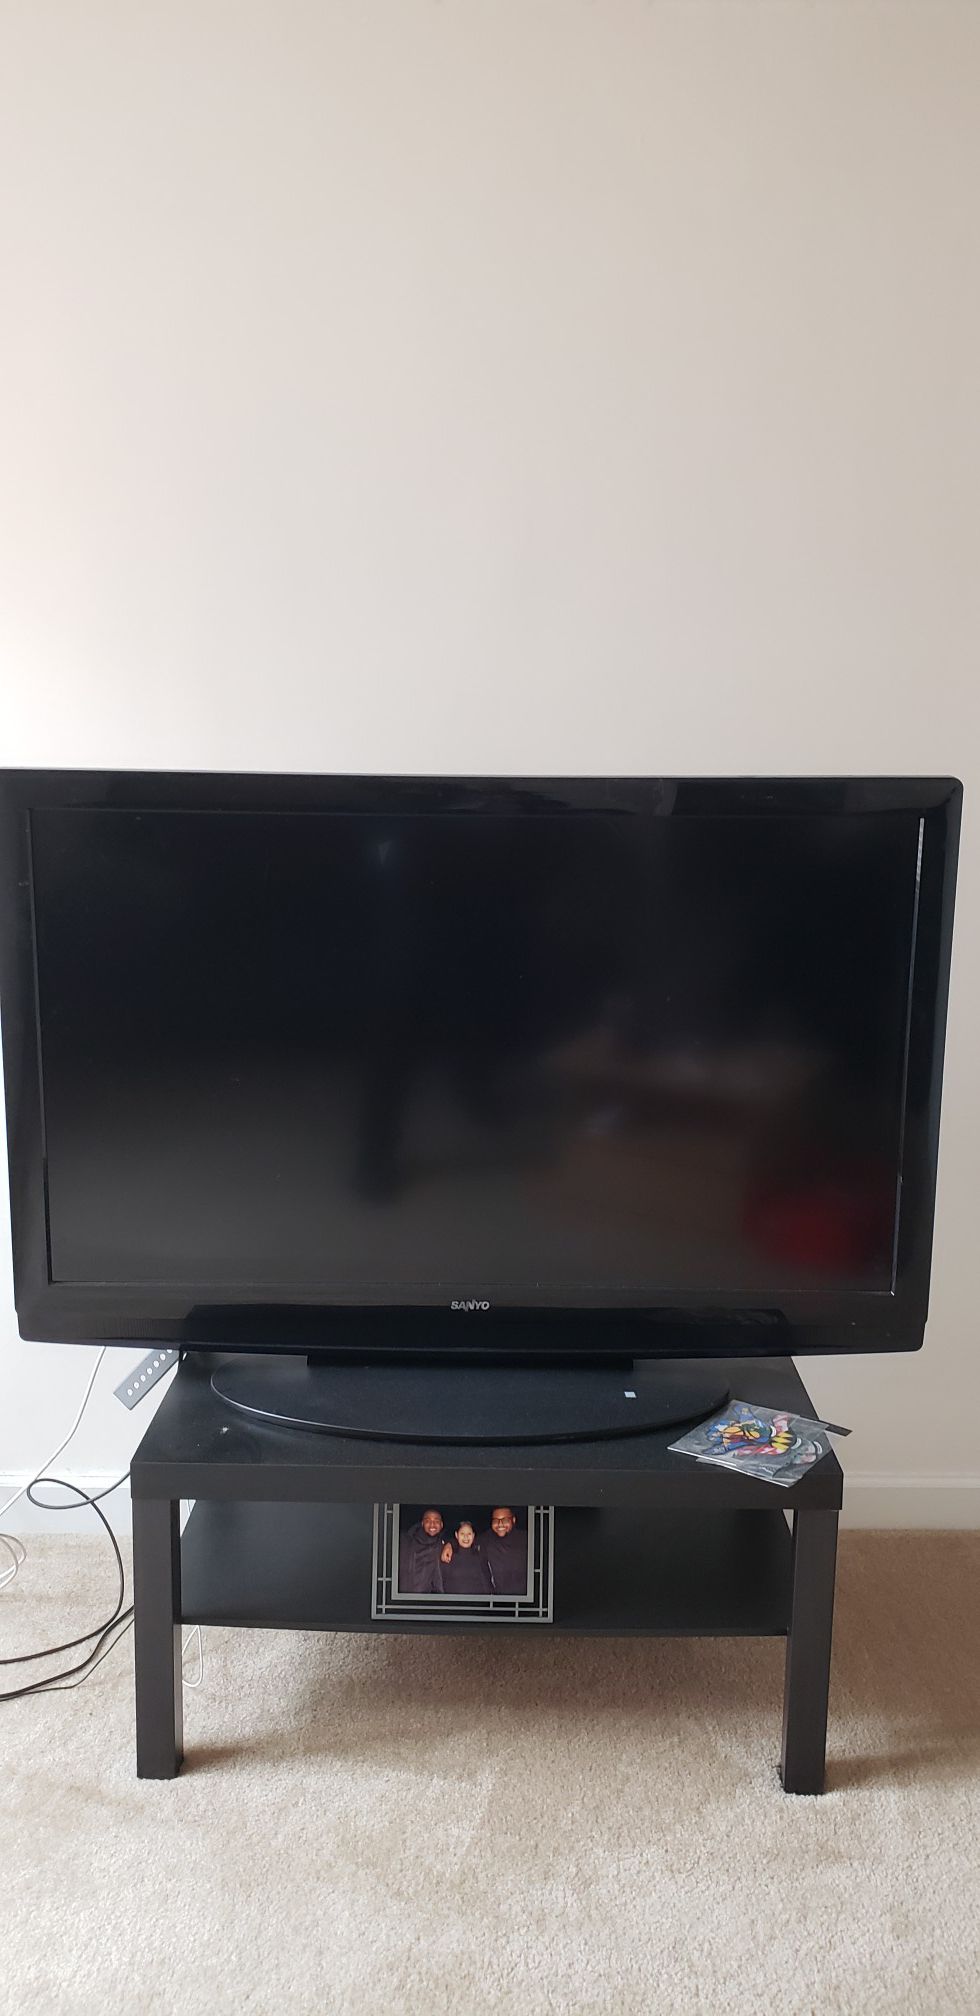 "43" inch BLACK TV BY SANYO